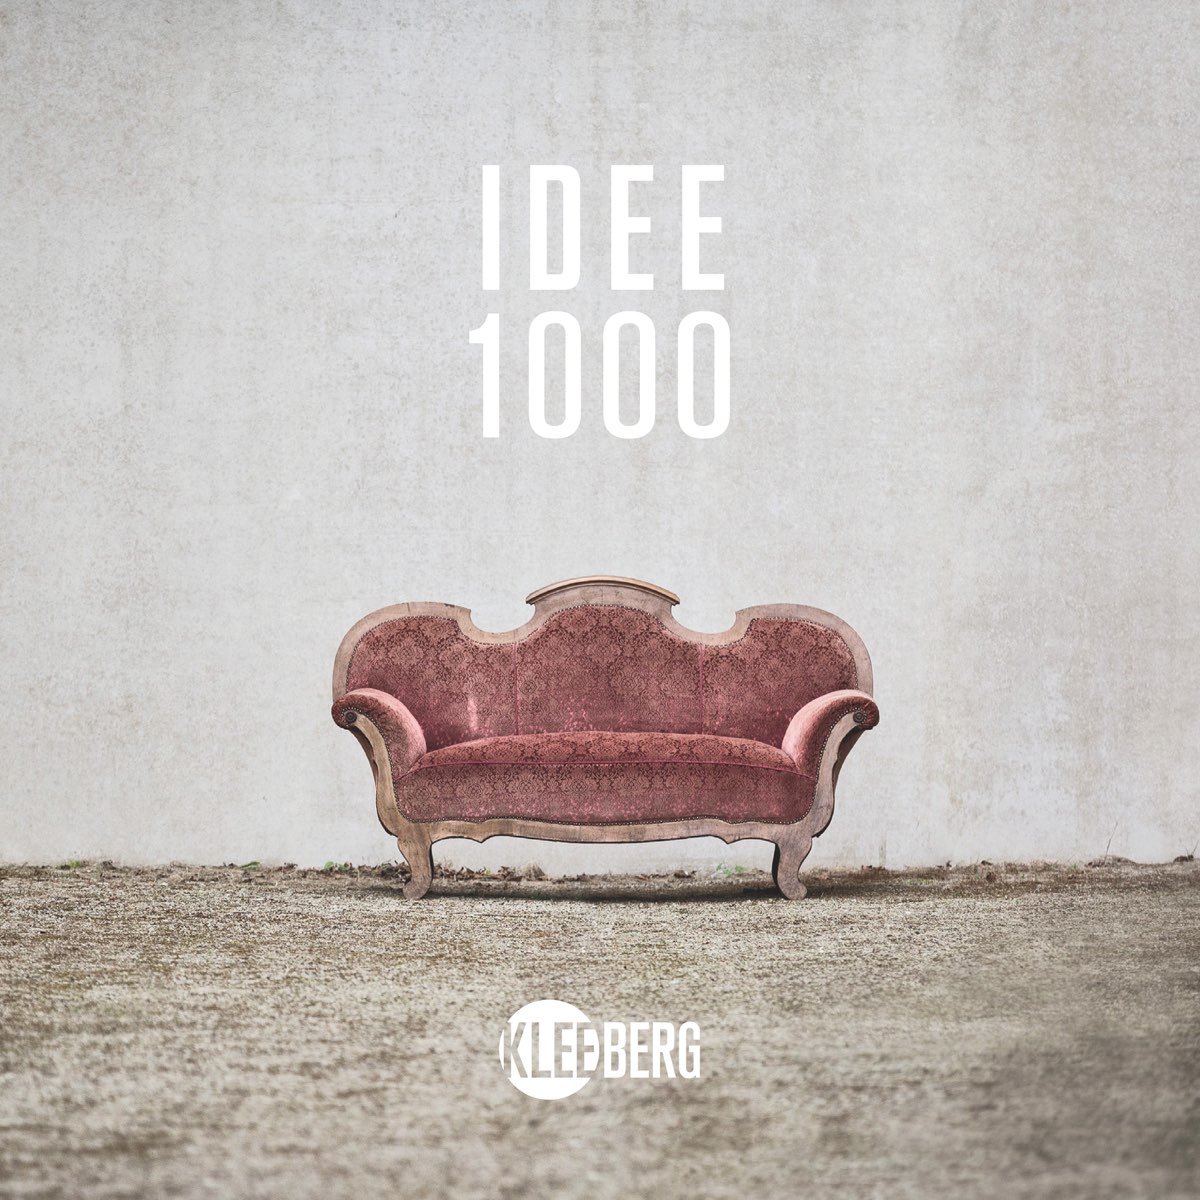 Idee 1000 - EP - Album by Kleeberg - Apple Music